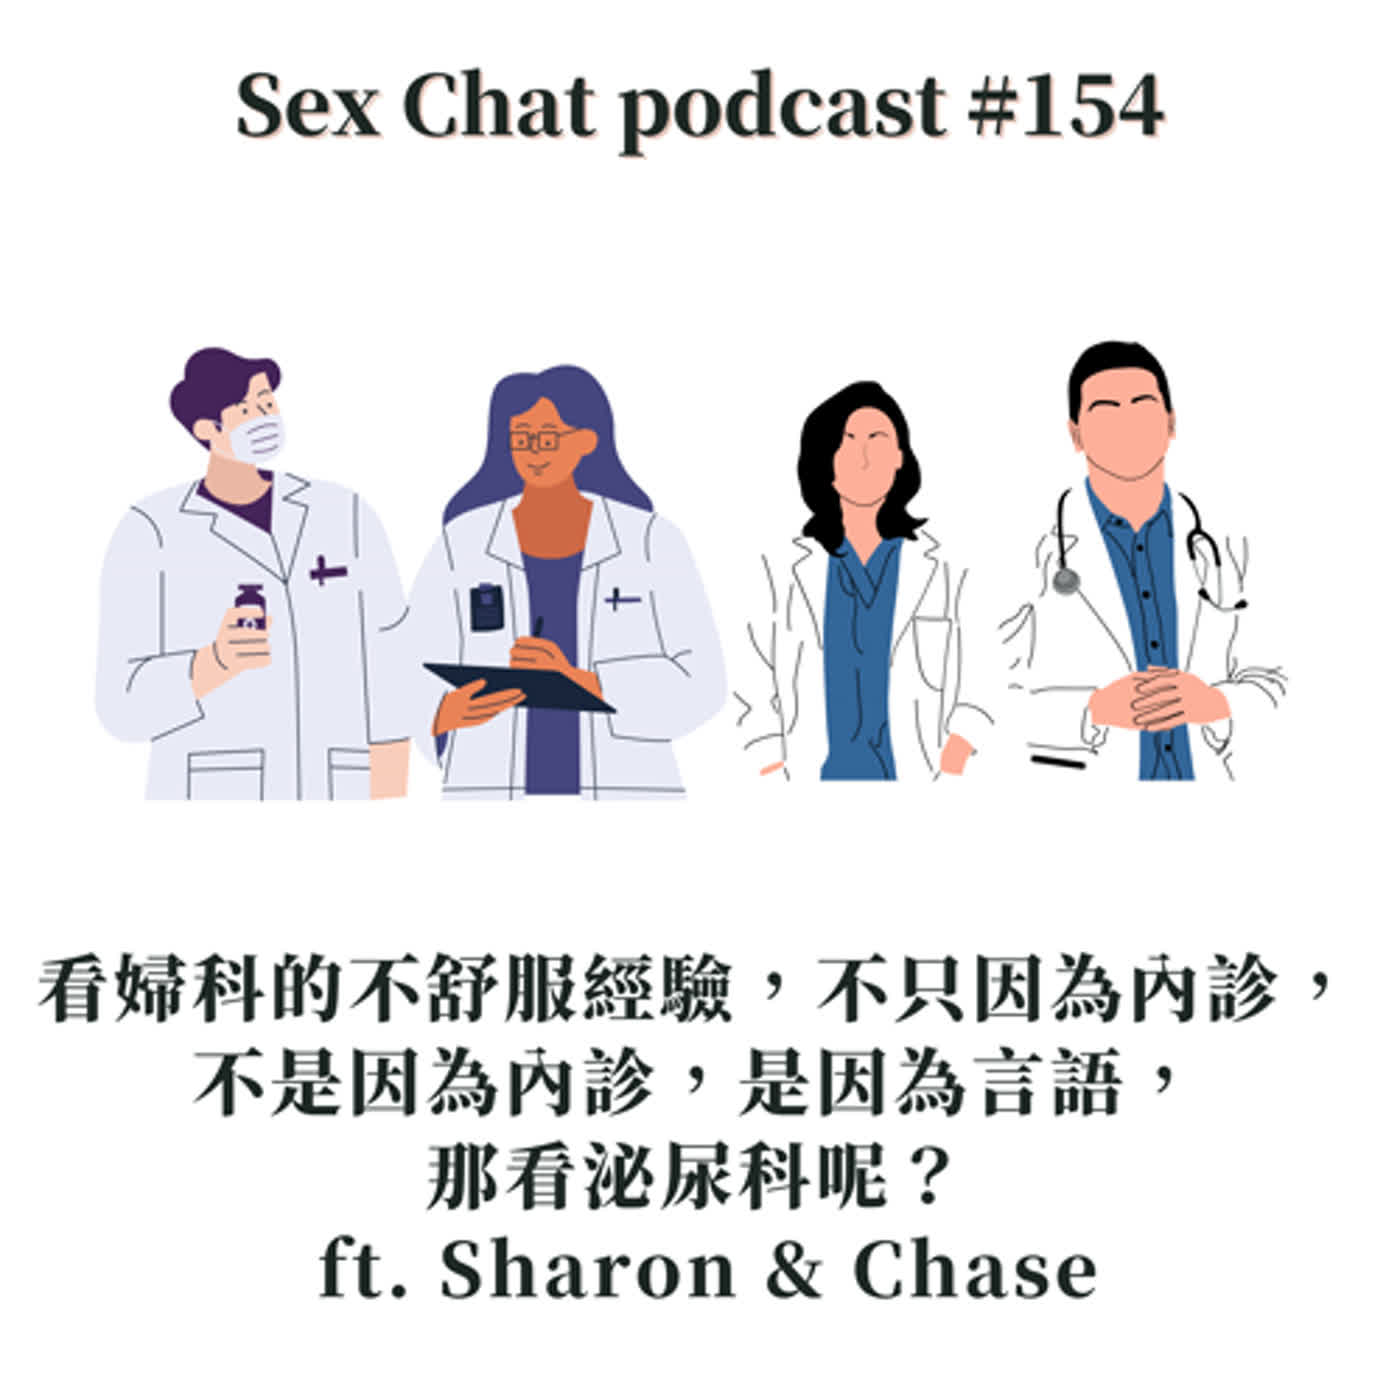 Sex Chat podcast #154 看婦科的不舒服經驗，不是因為內診，是因為言語，那看泌尿科呢？ ft. Sharon & Chase